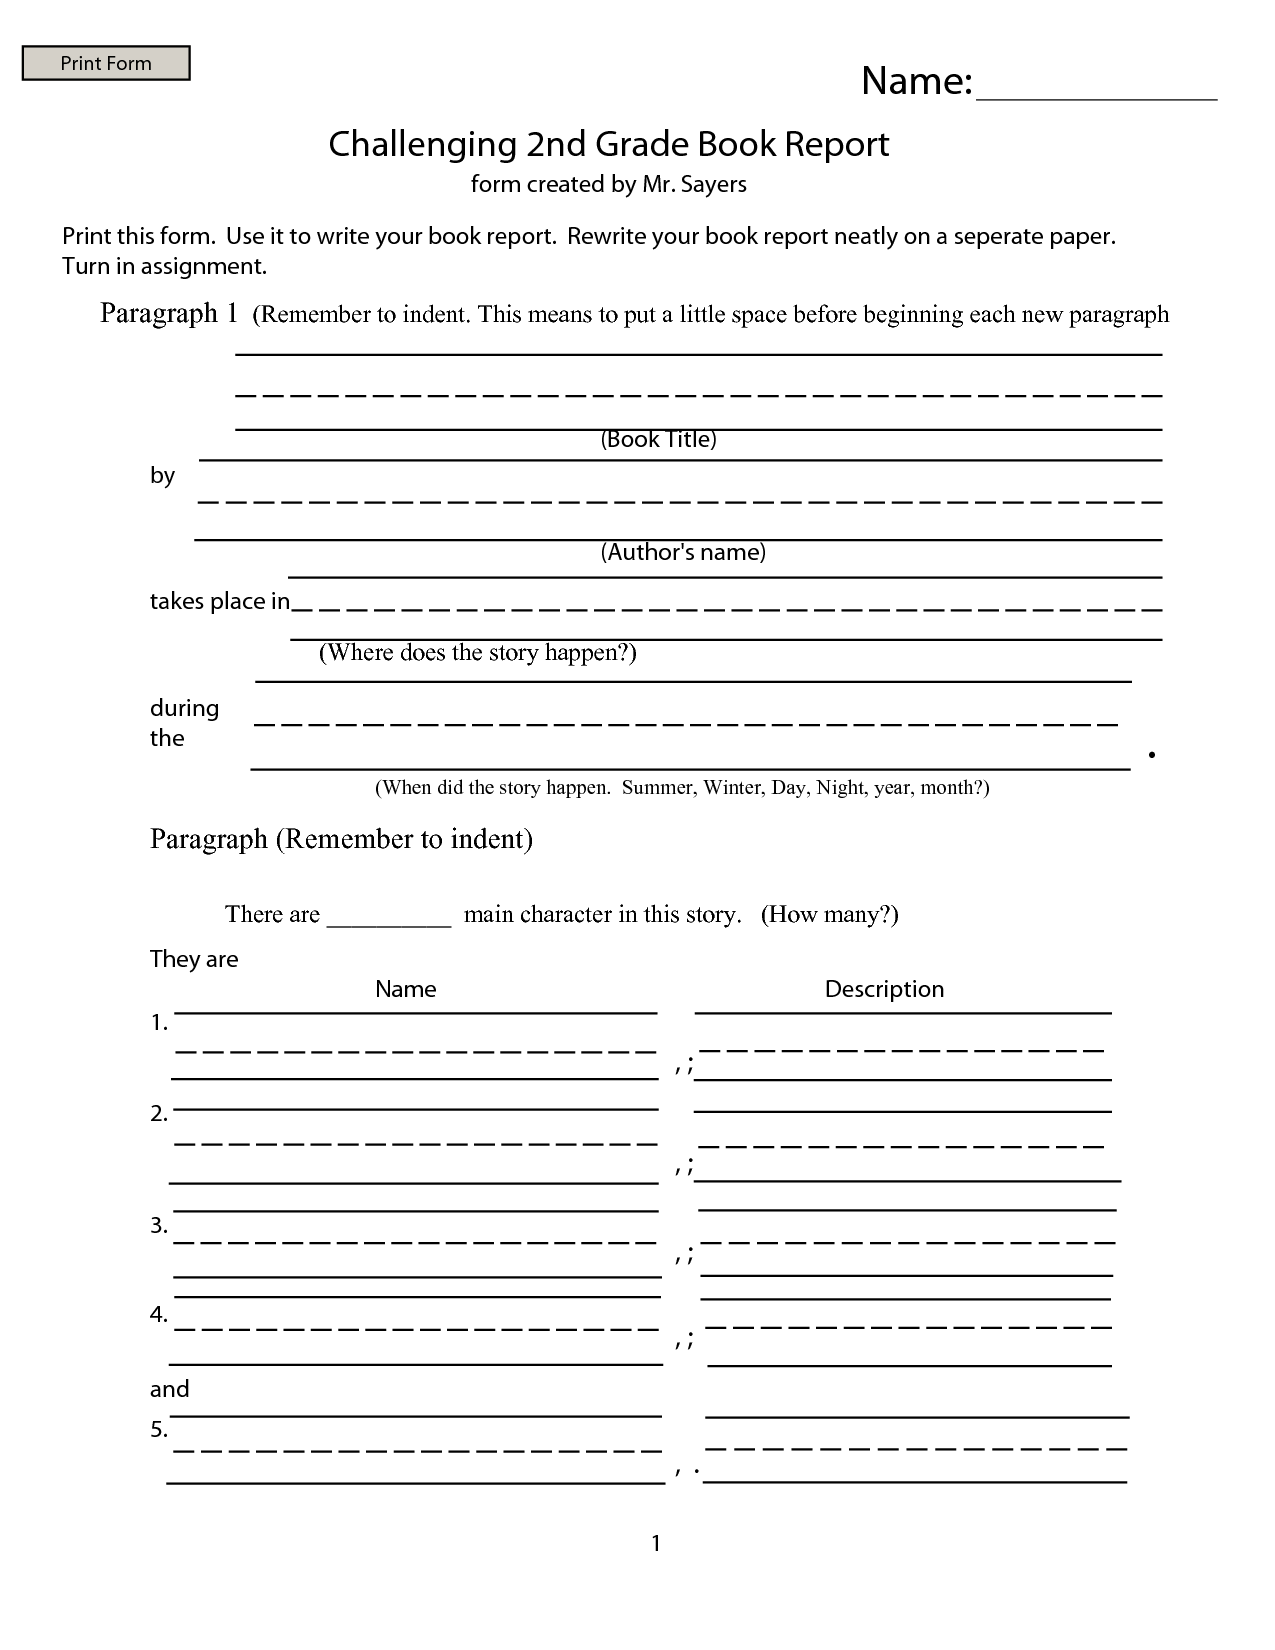 22nd grade nonfiction book report template Within Book Report Template 2nd Grade